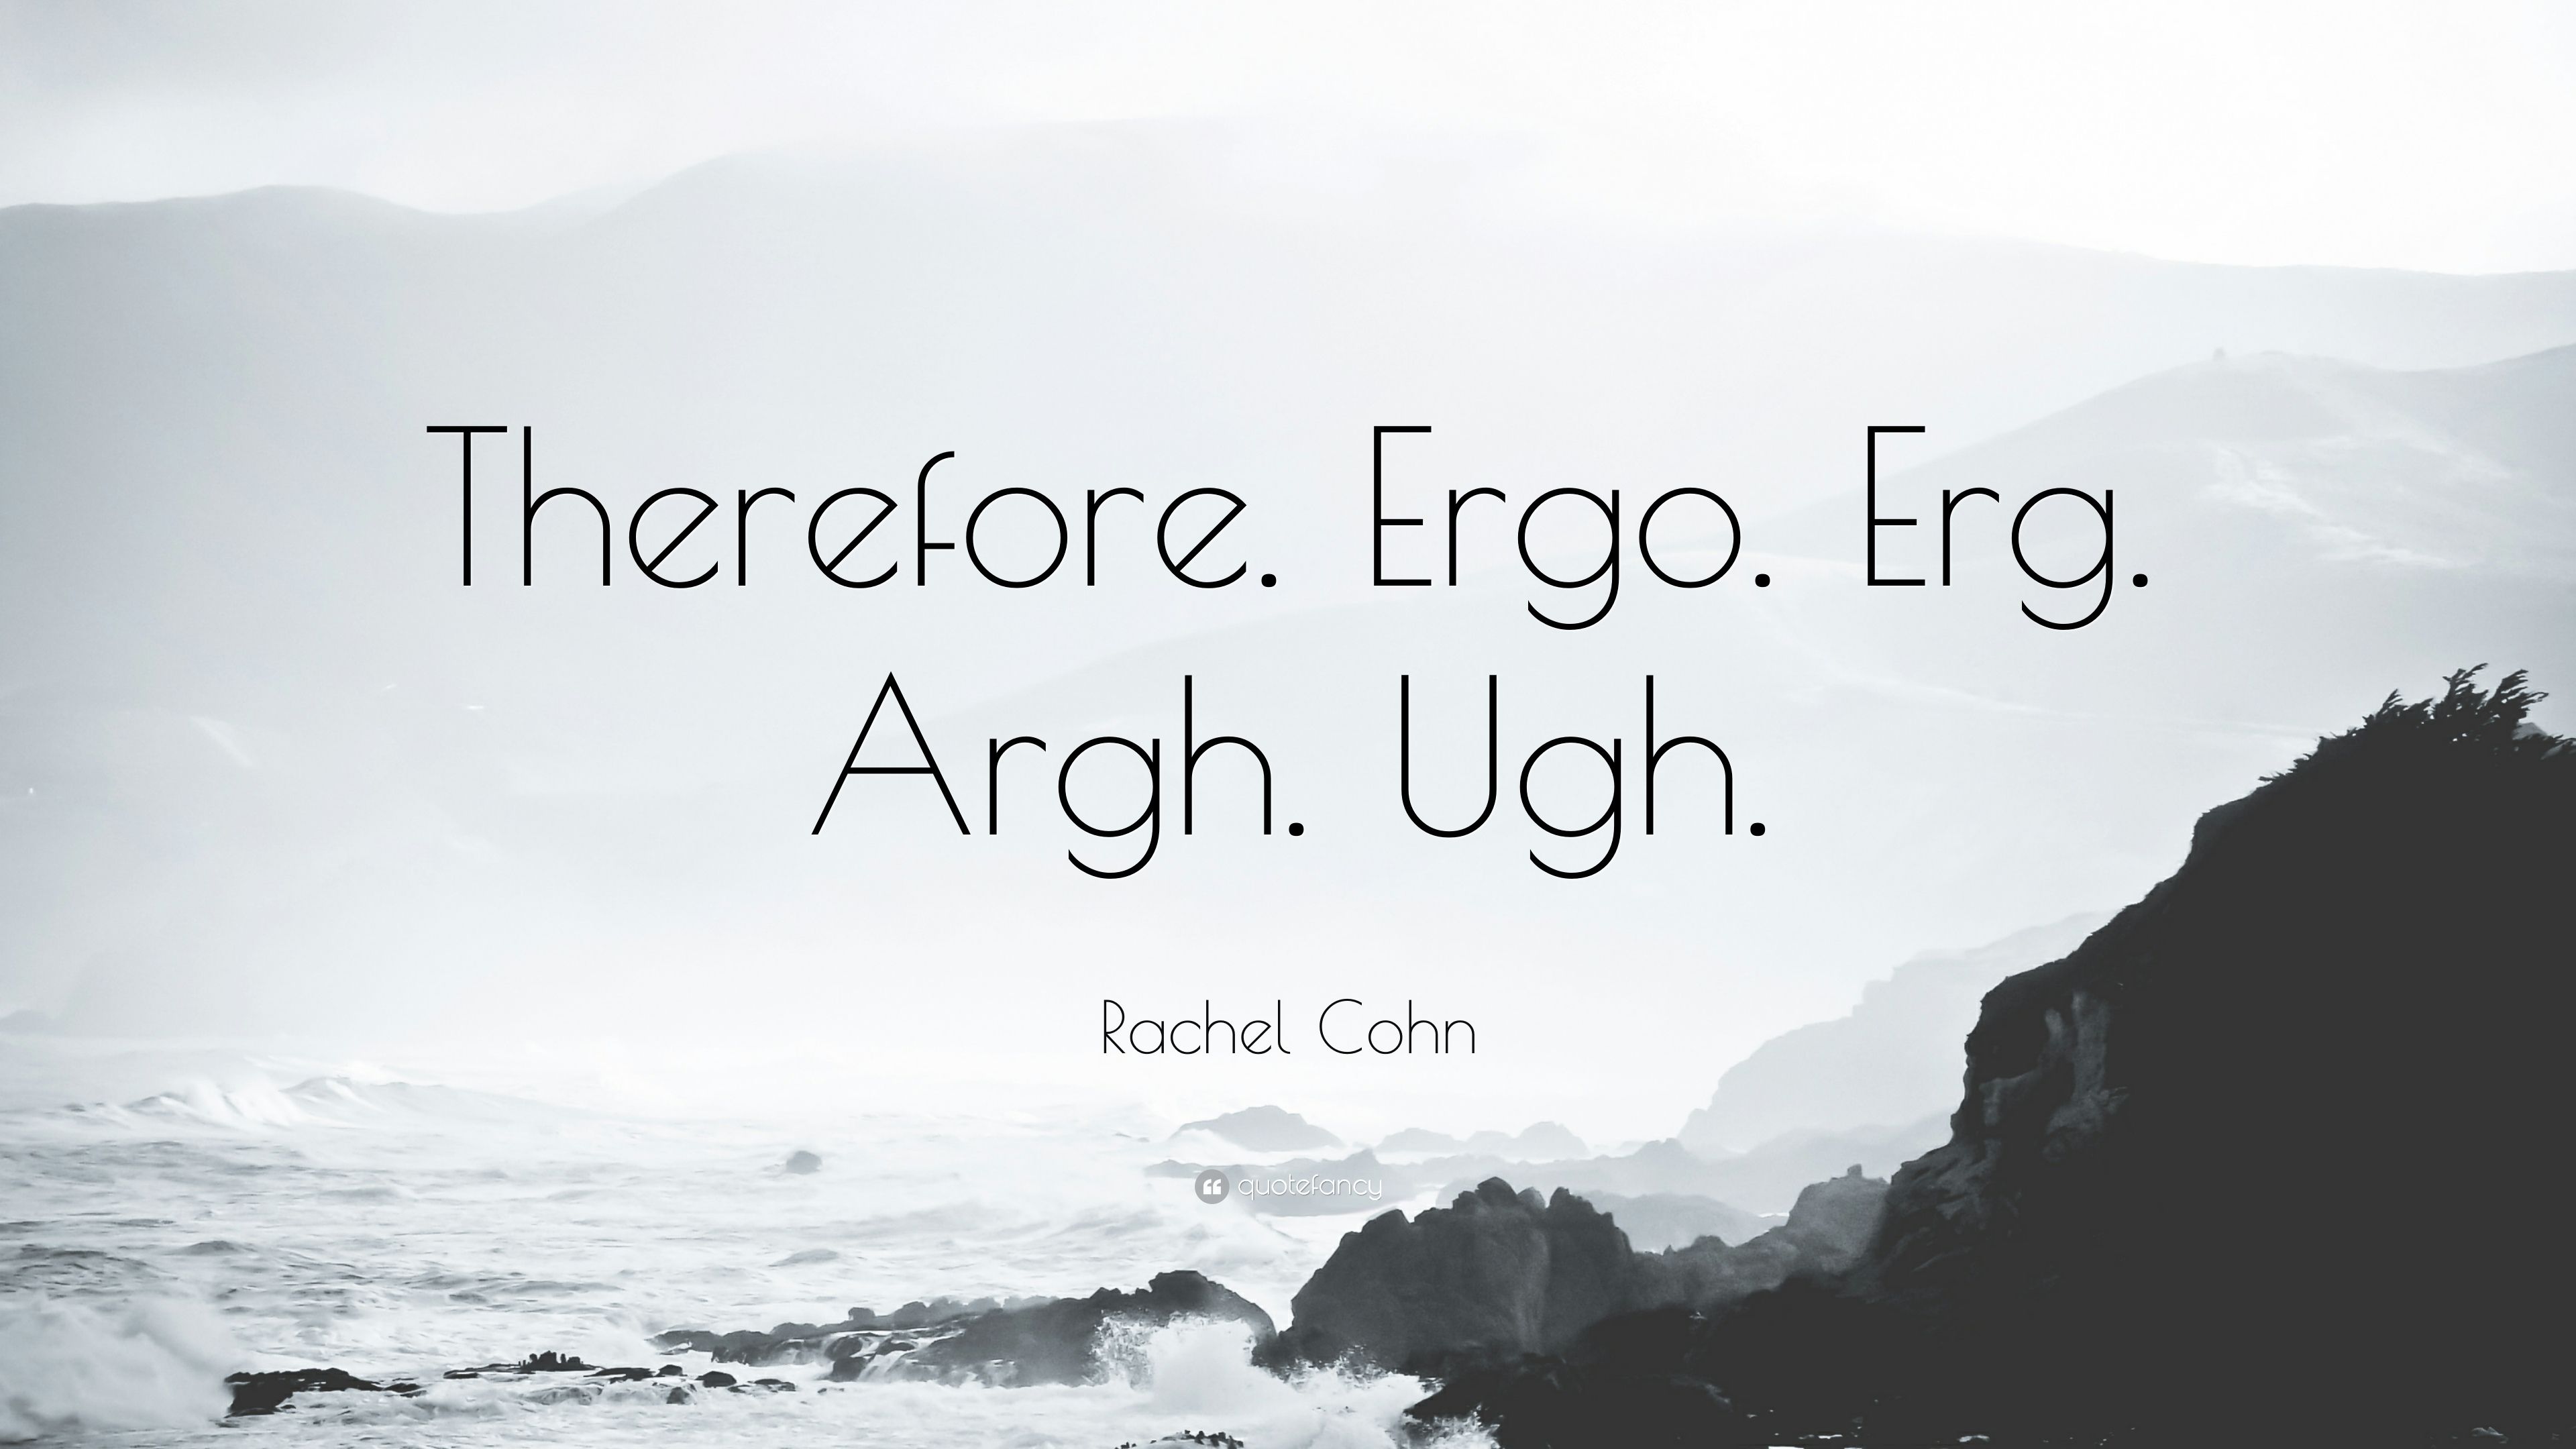 Rachel Cohn Quote: “Therefore. Ergo. Erg. Argh. Ugh.” 7